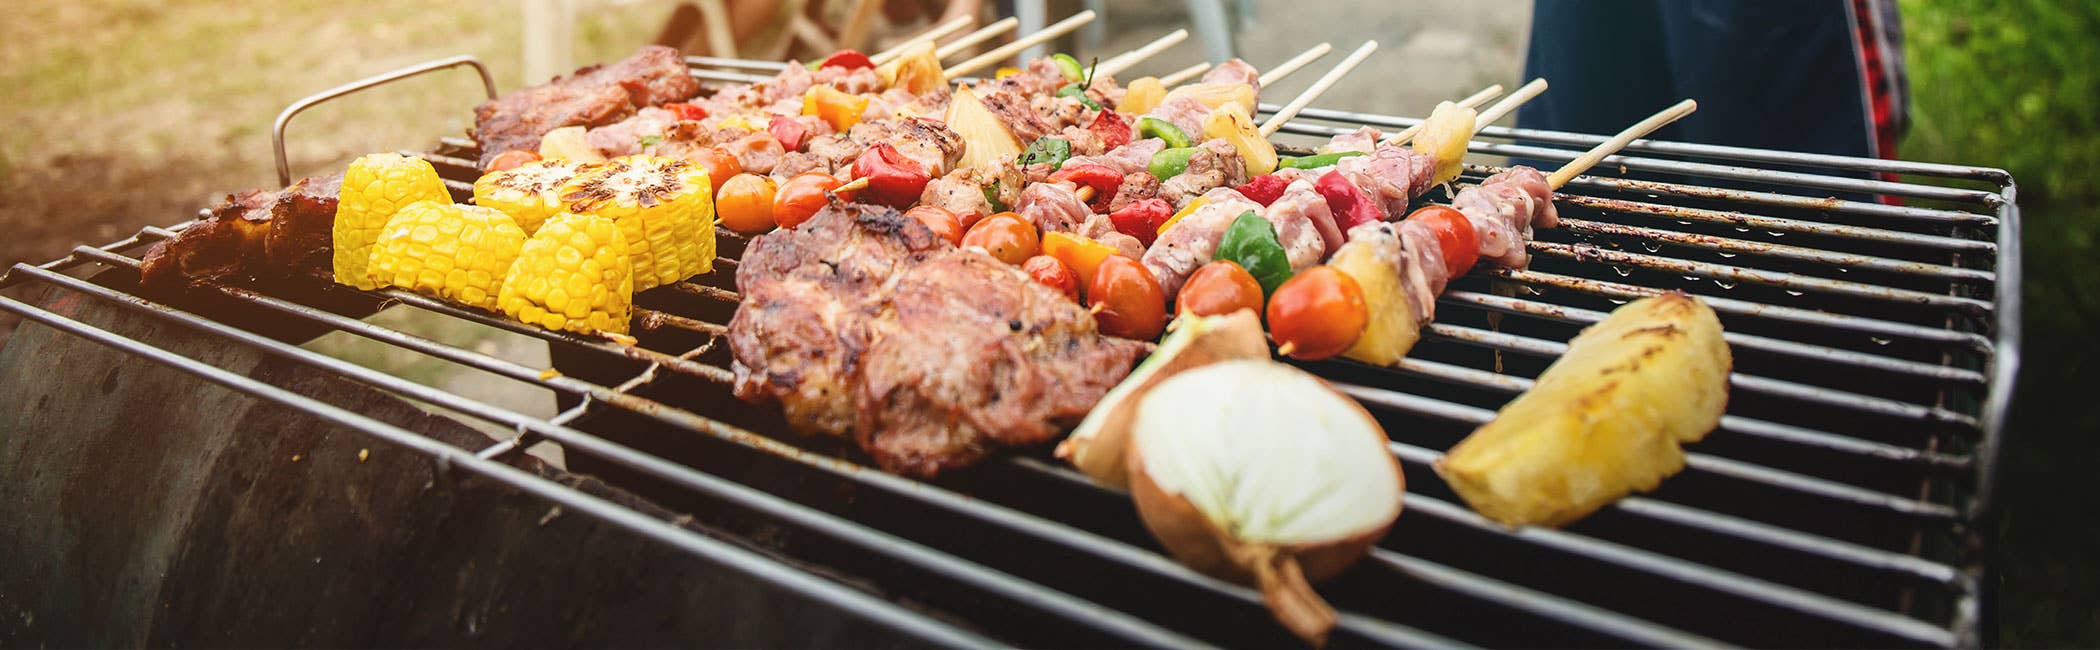 Bbq Checklist: Arranging A Fun, Safe & Successful Barbecue